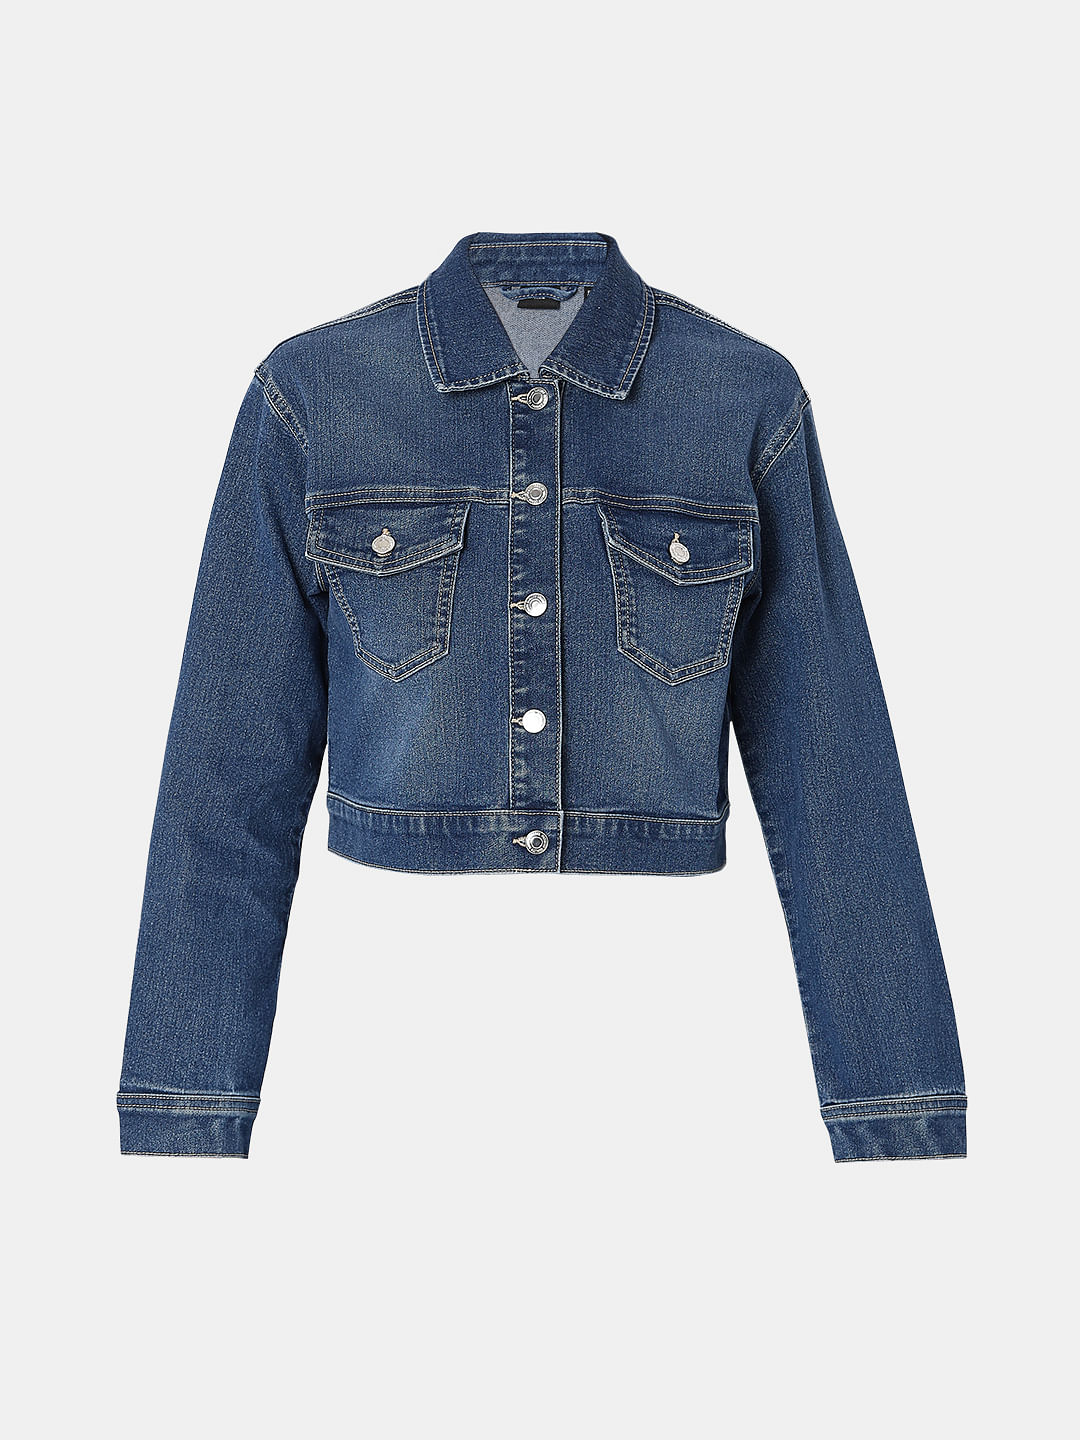 Buy Vero Moda Spread Collar Tailored Jacket - Jackets for Women 24674830 |  Myntra